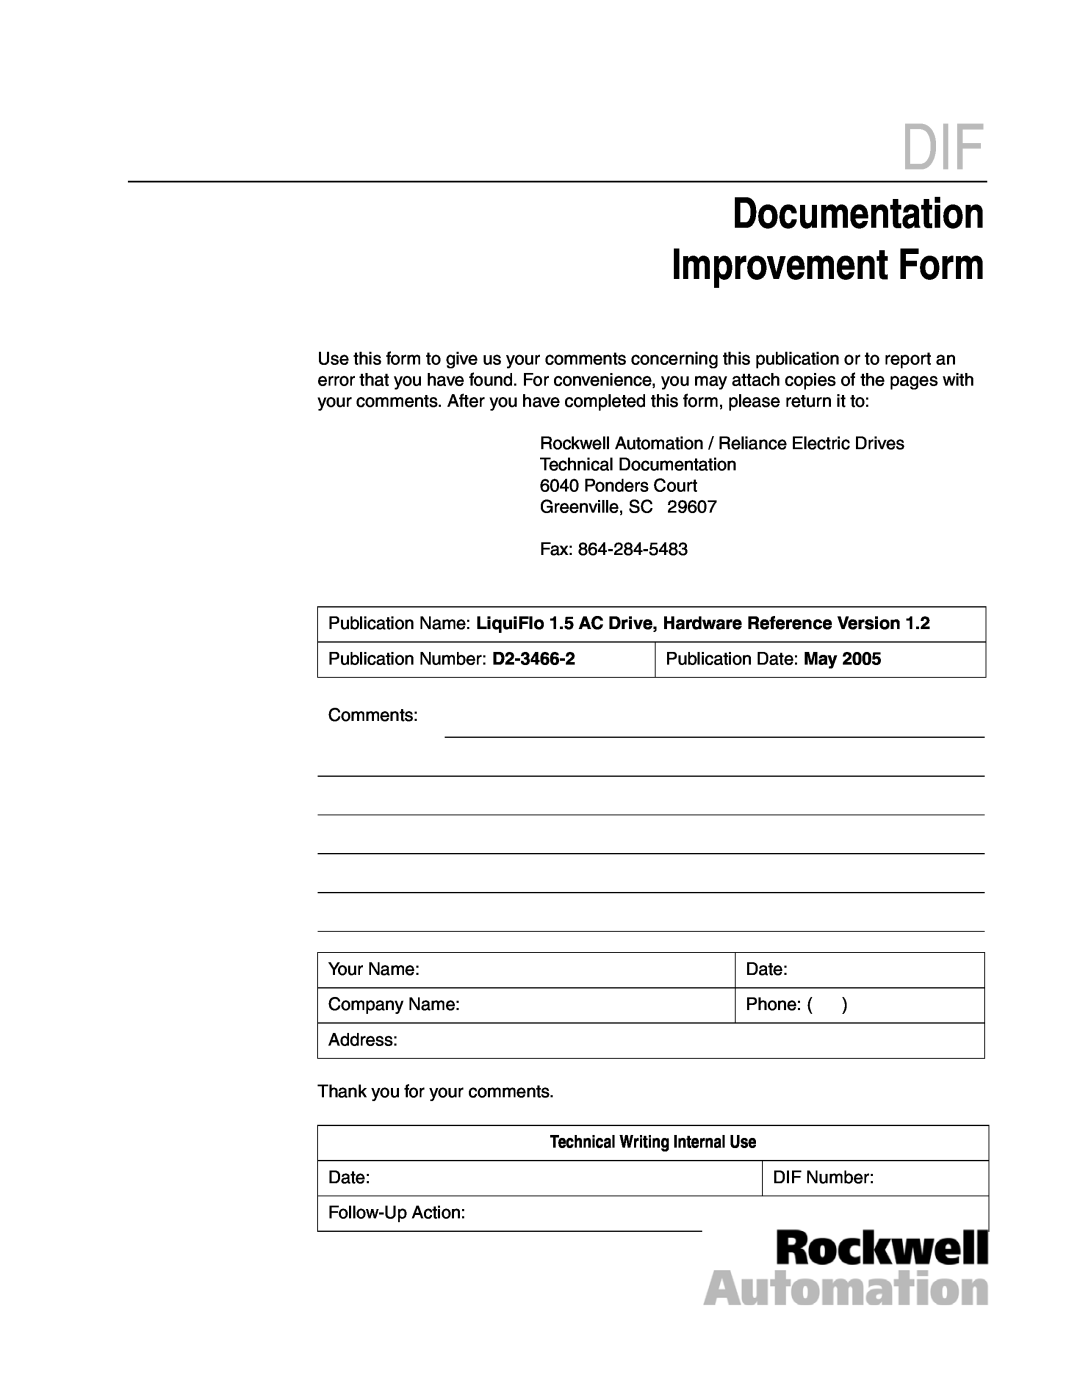 Carrier D2-3466-2 Documentation Improvement Form, Publication Name LiquiFlo 1.5 AC Drive, Hardware Reference Version 